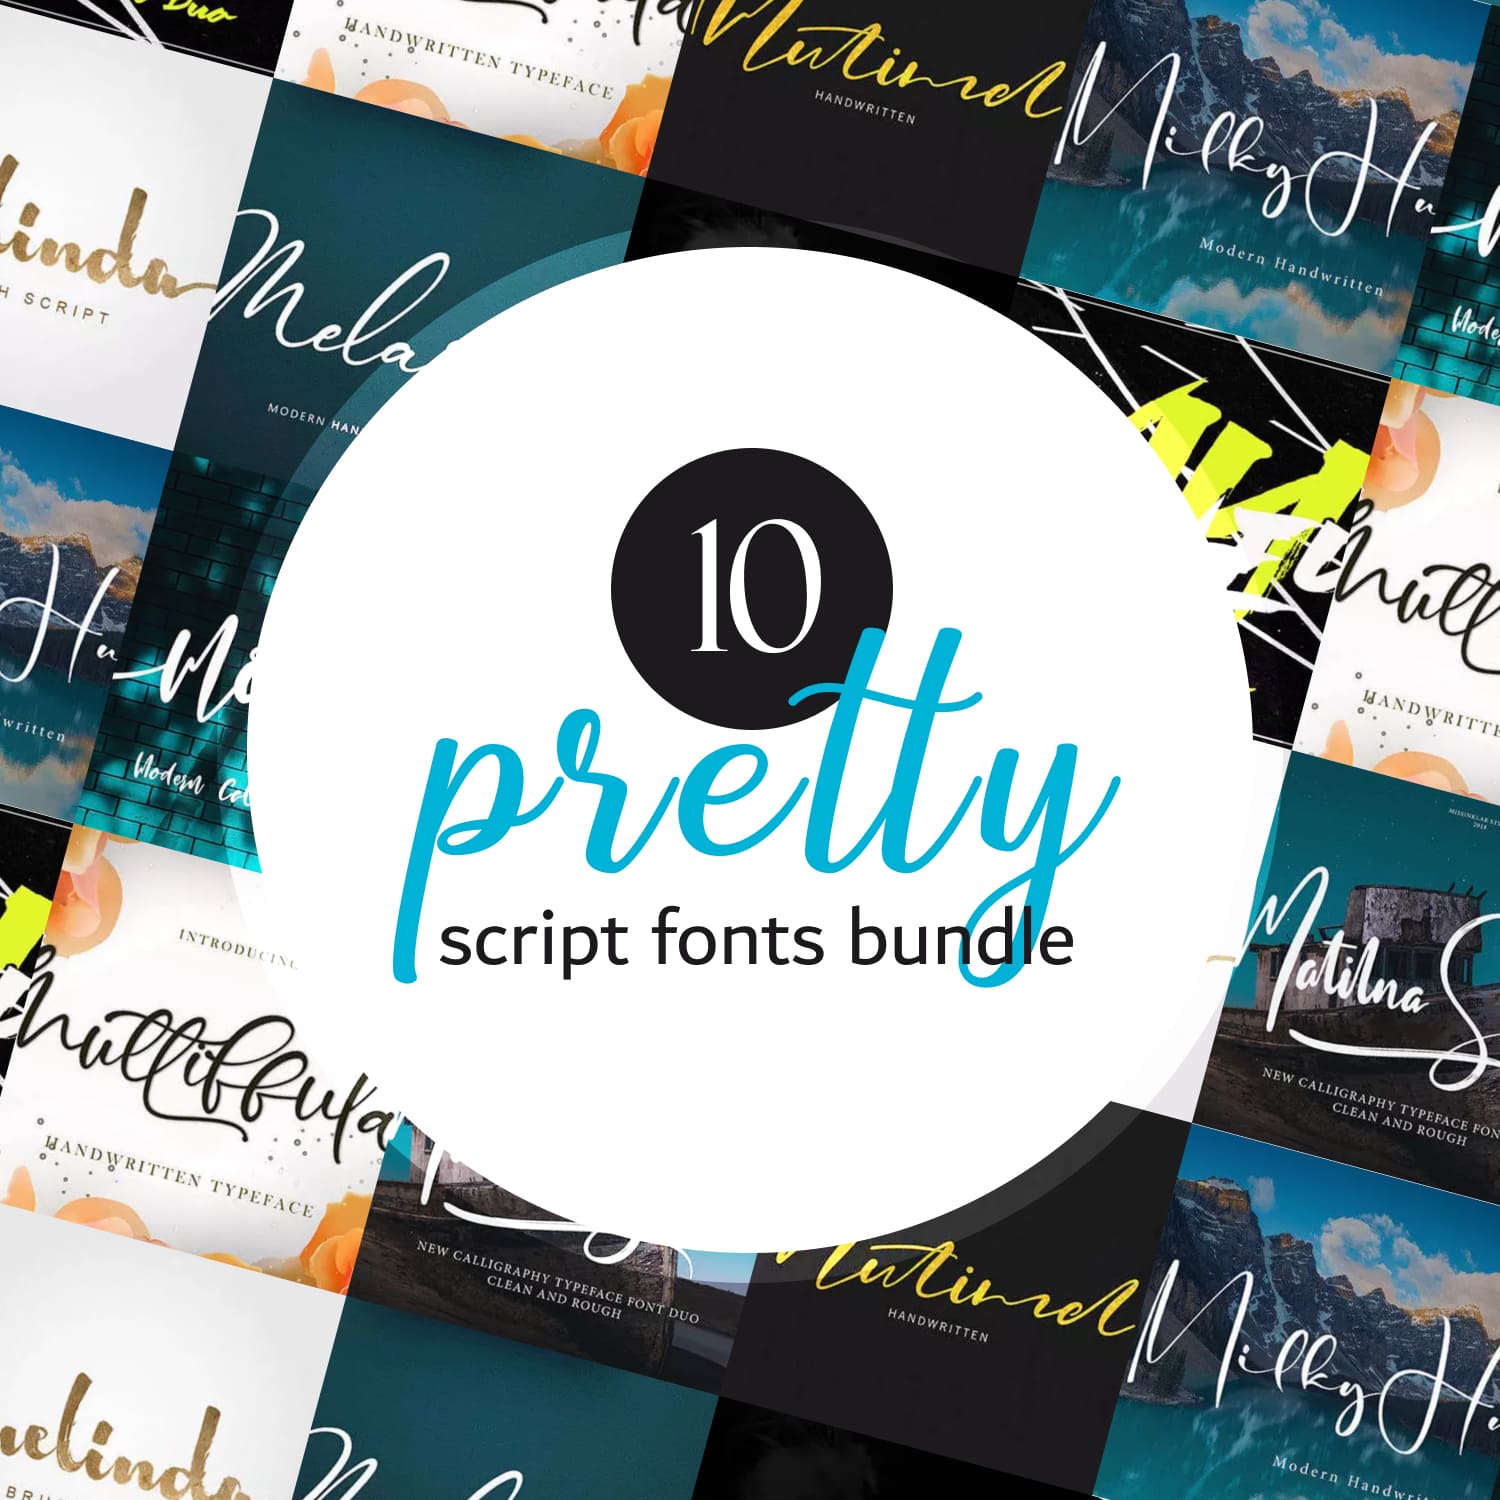 10 pretty script fonts bundle.